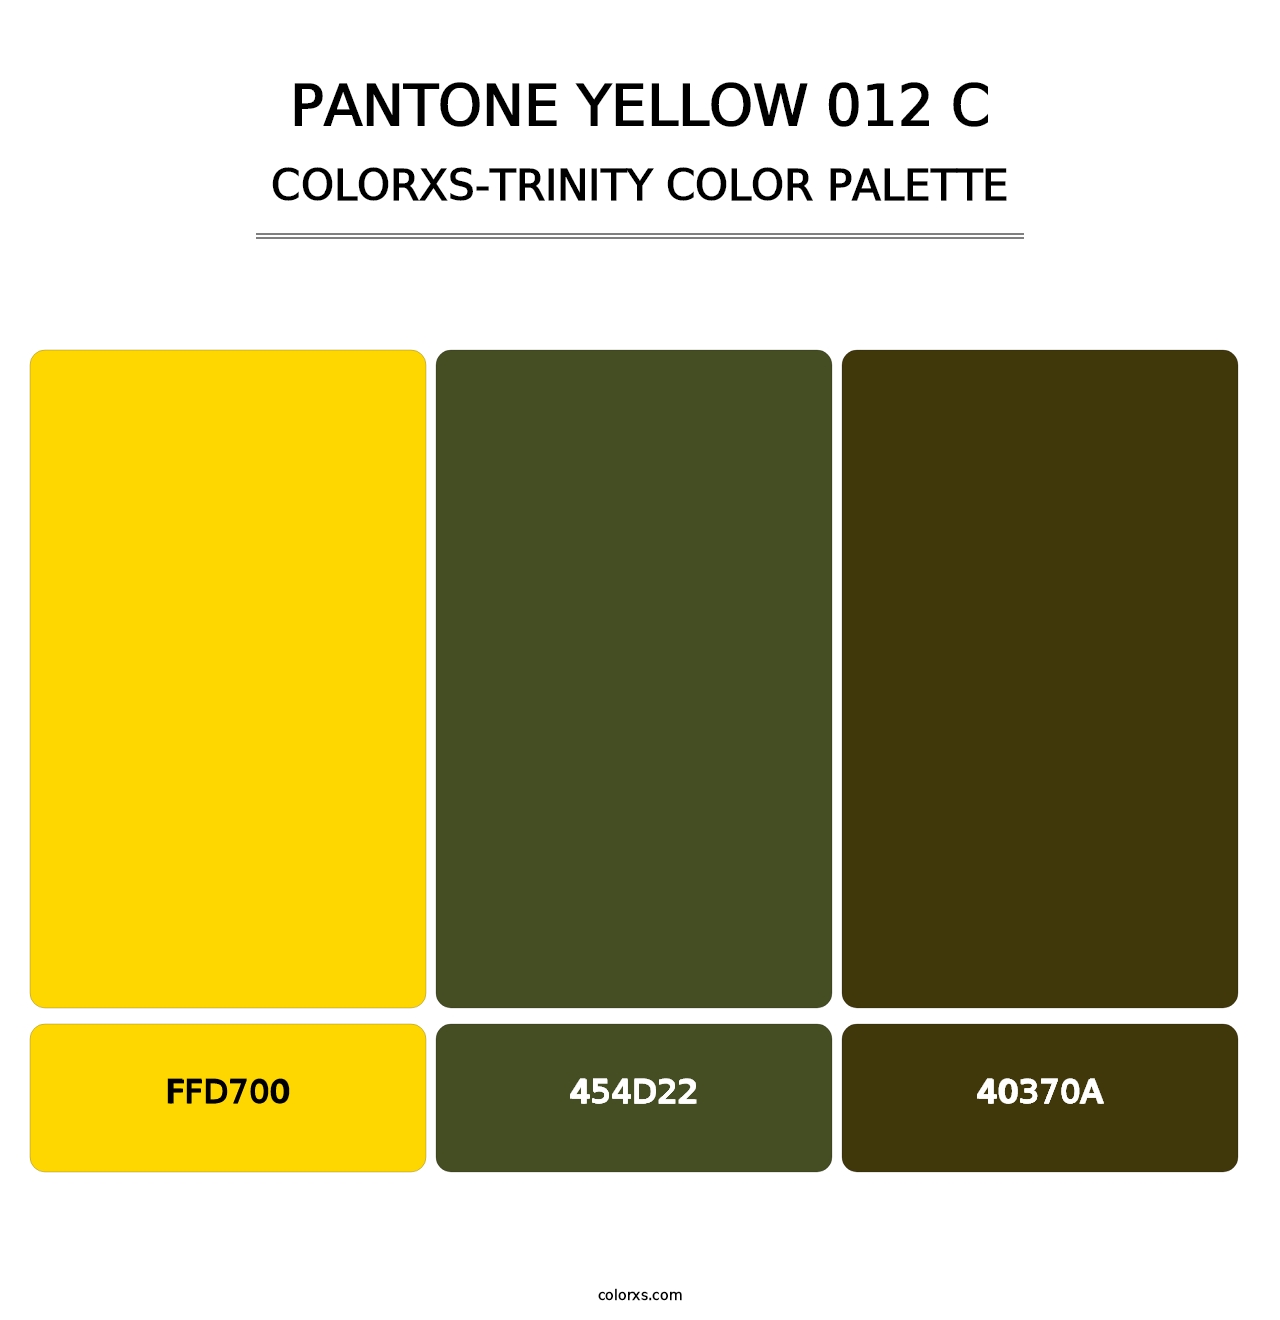 PANTONE Yellow 012 C - Colorxs Trinity Palette